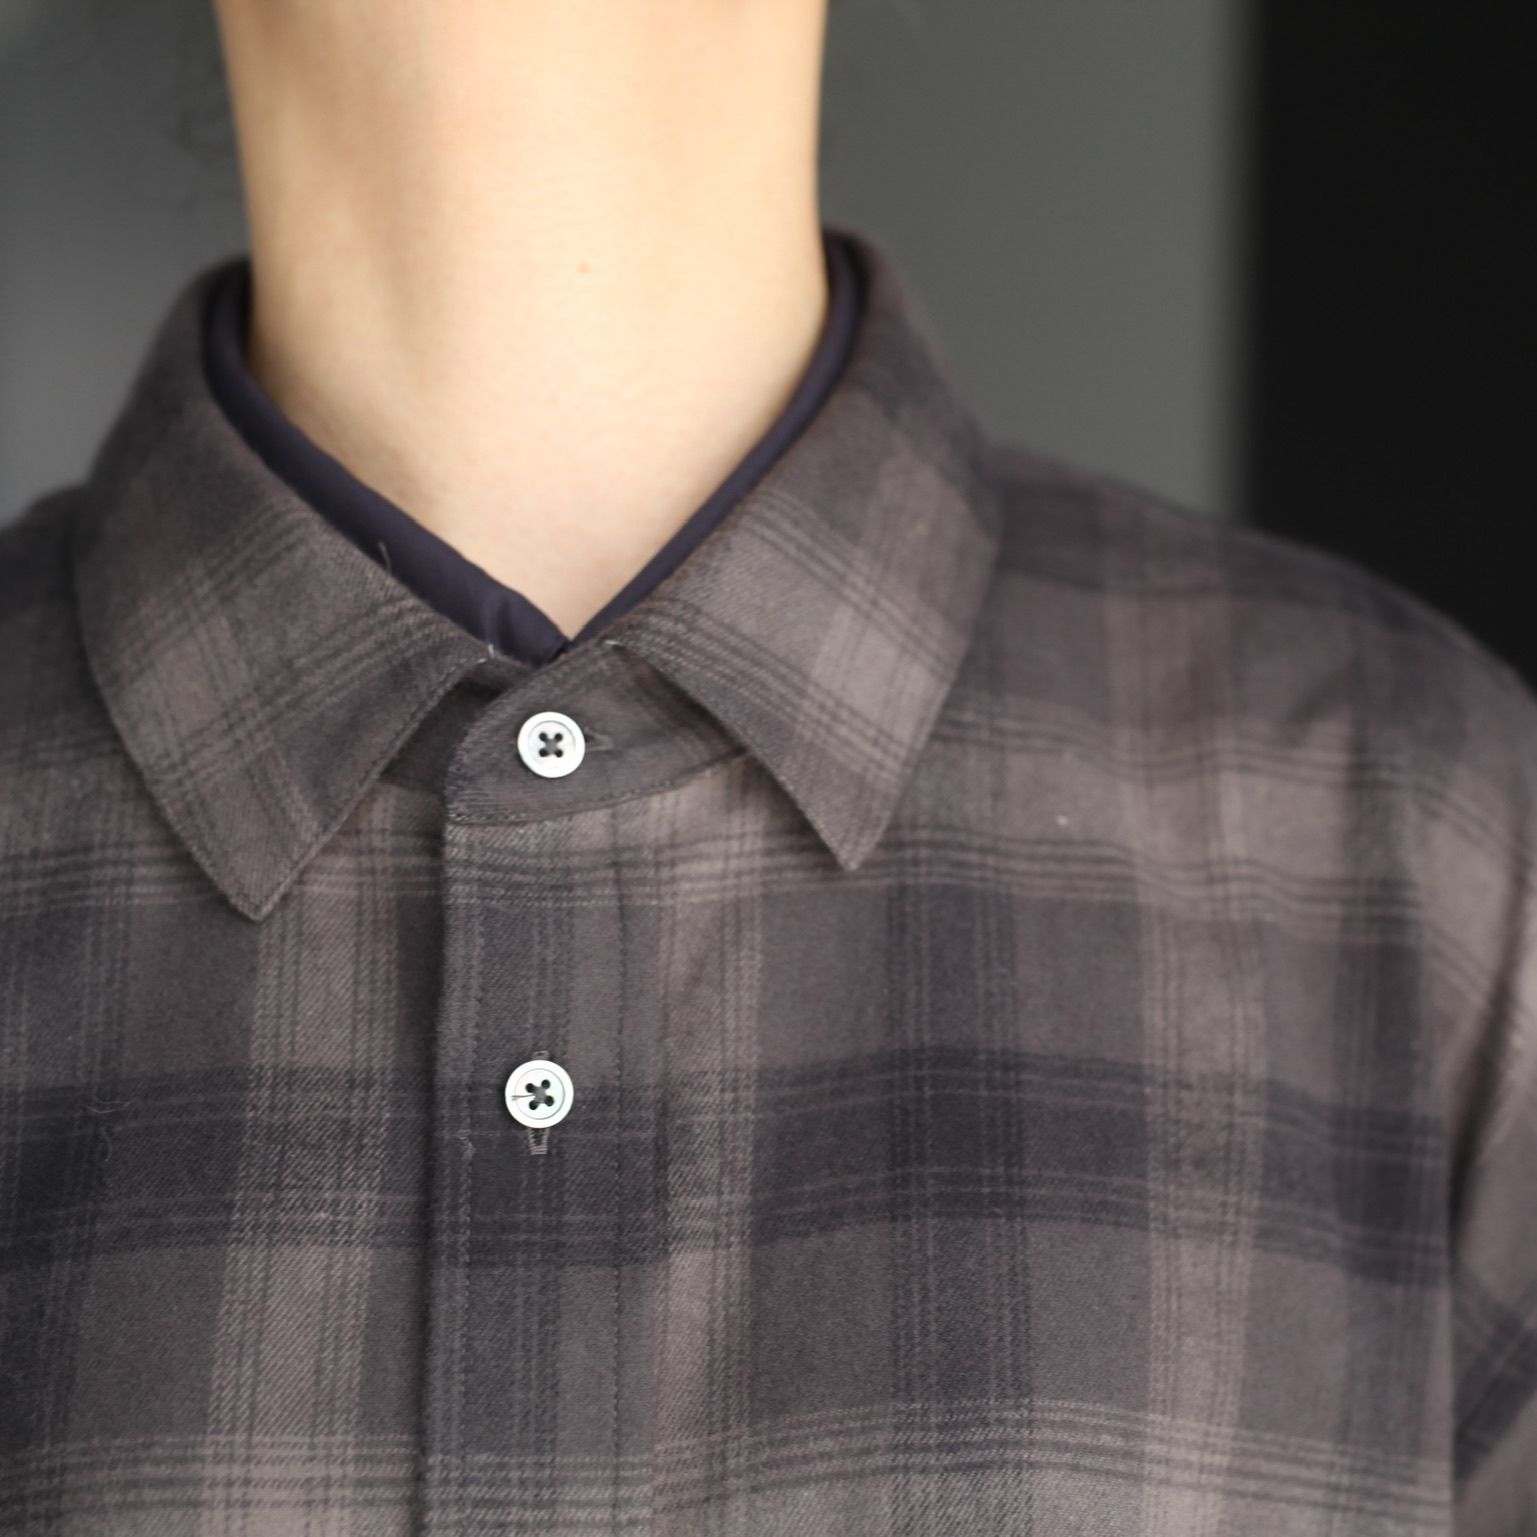 stein - 【残りわずか】Oversized Layered Flannel Shirt | ACRMTSM